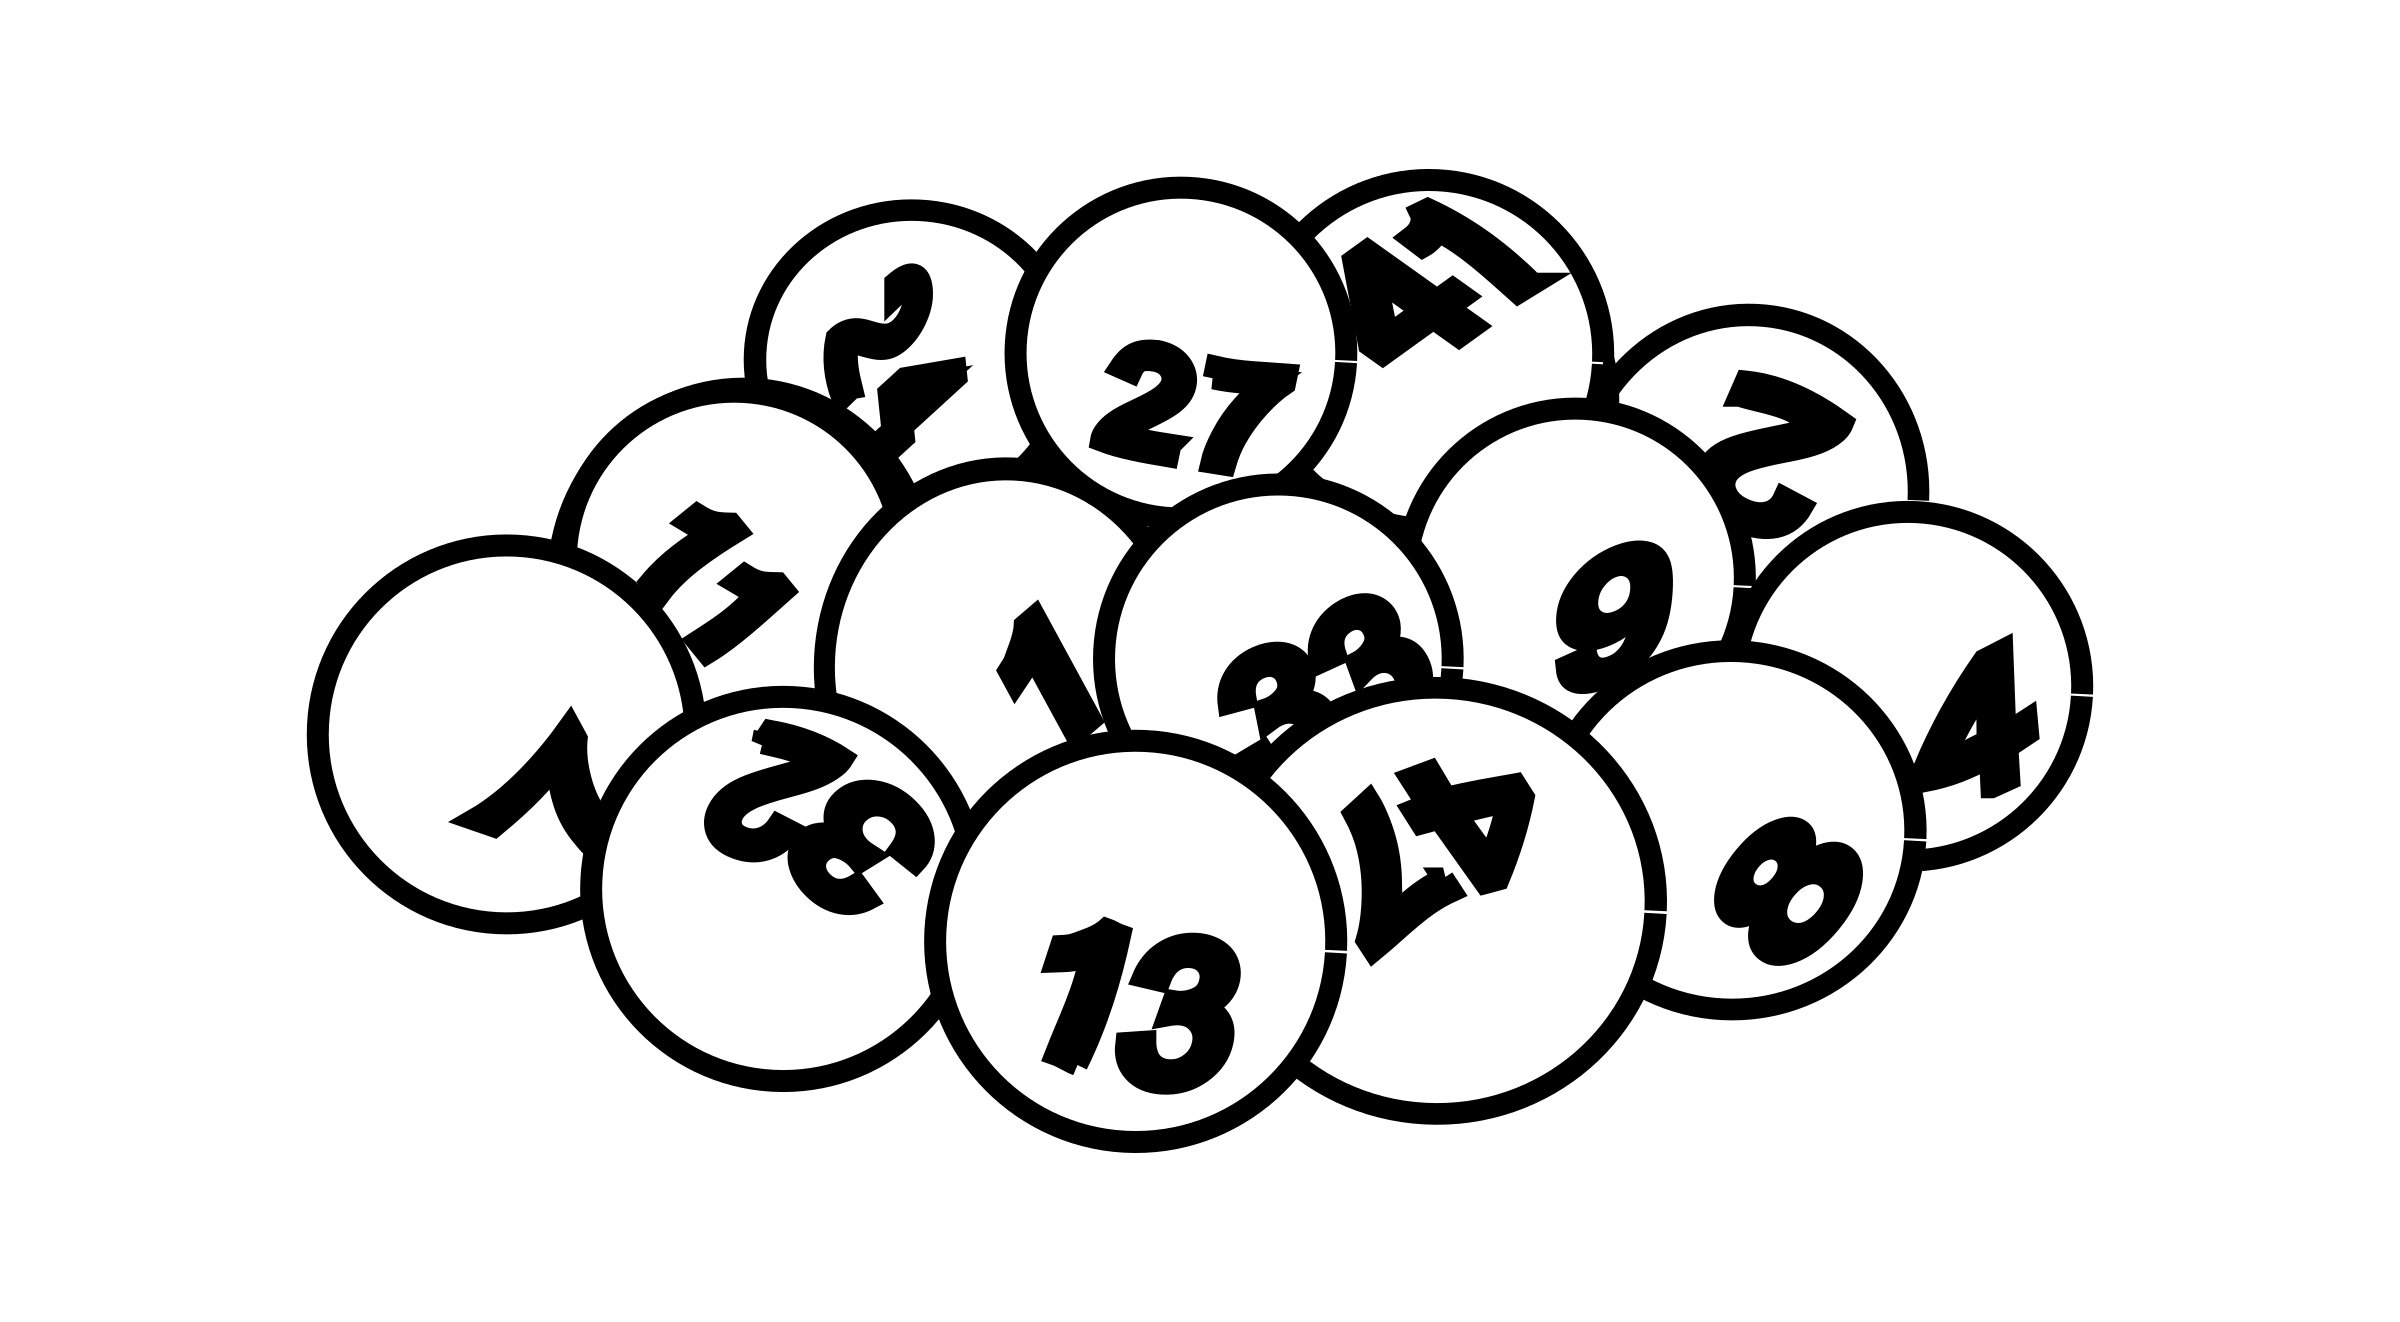 Lottery balls big image png.